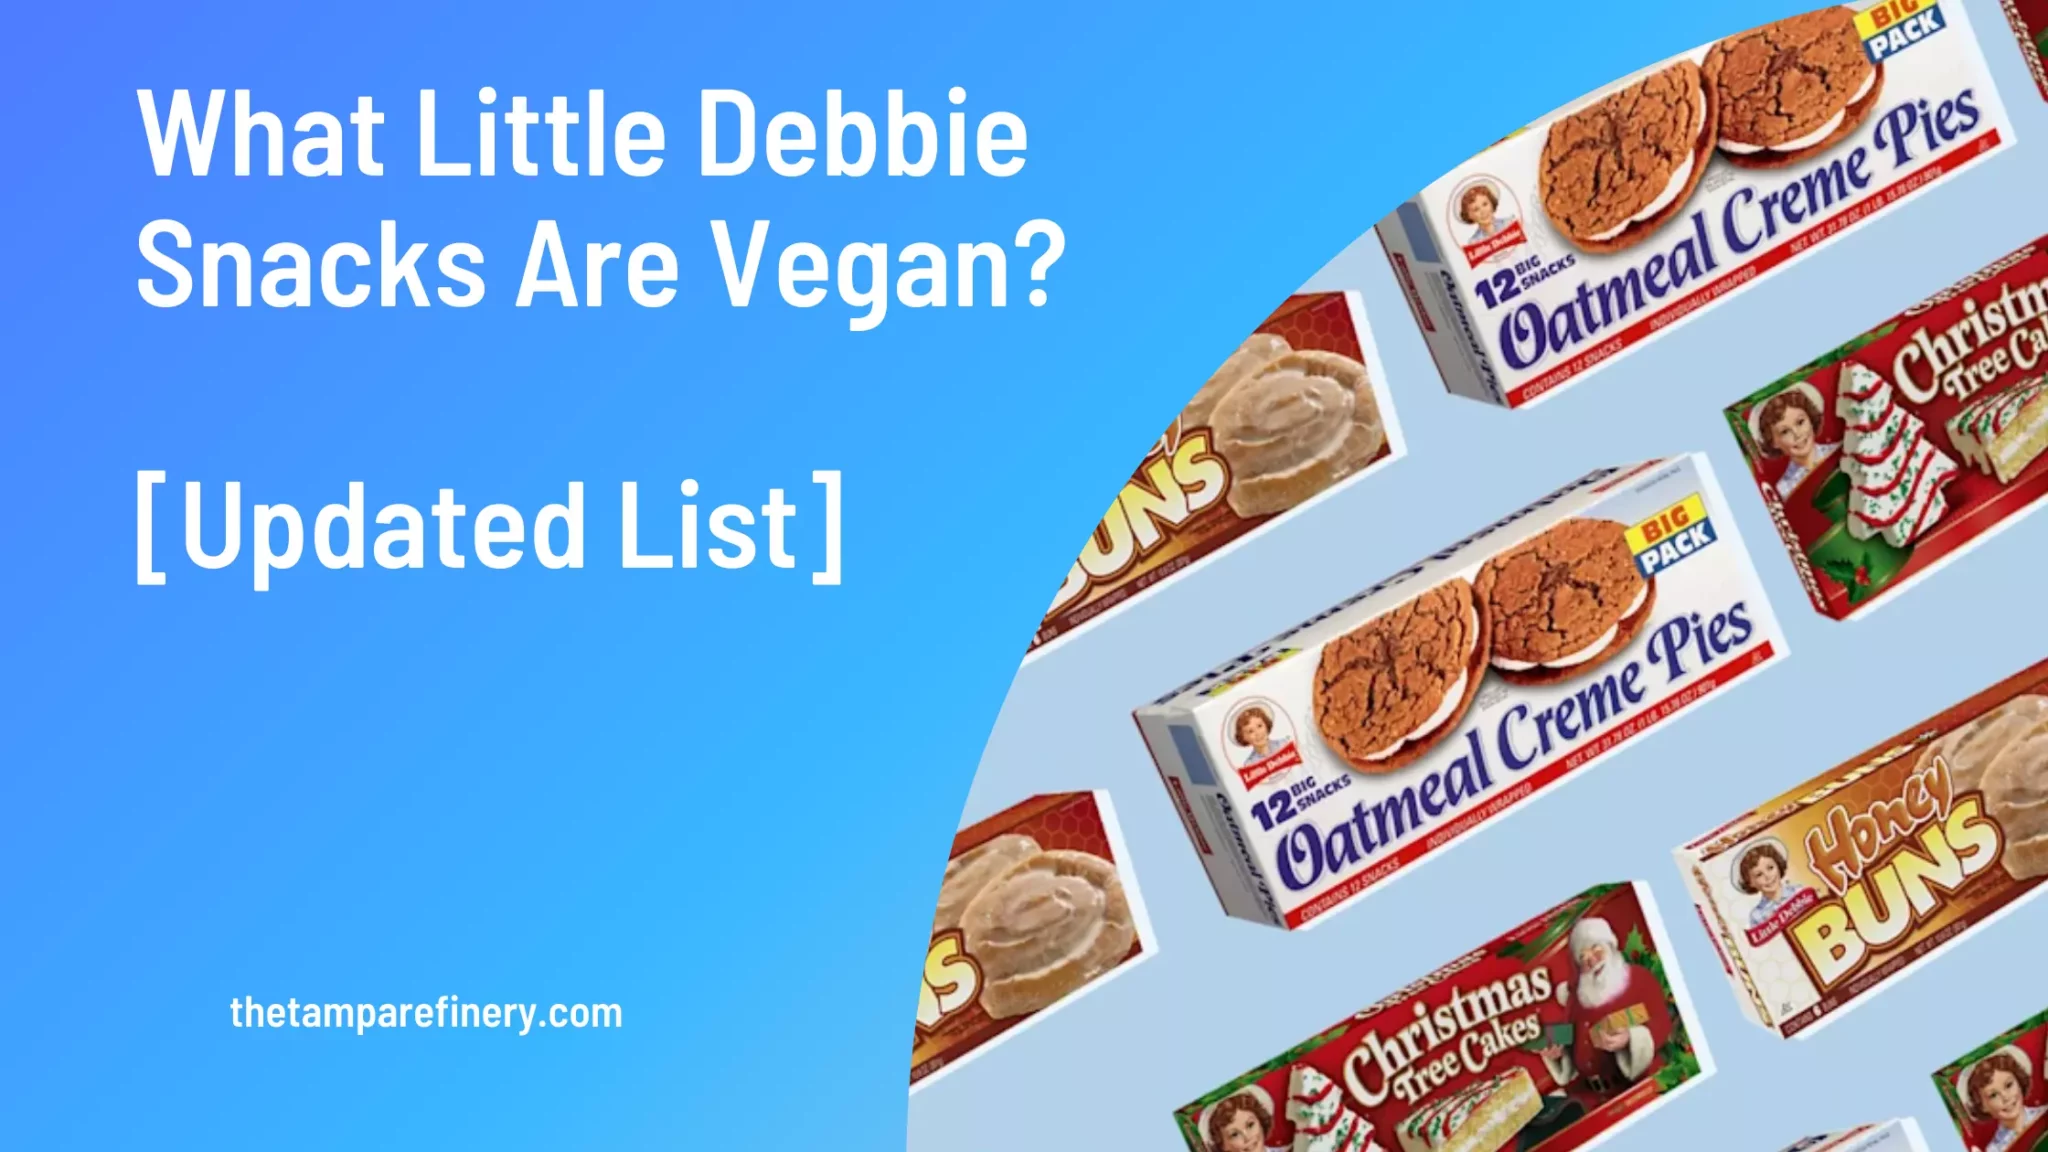 Little Debbie Snacks Are Vegan